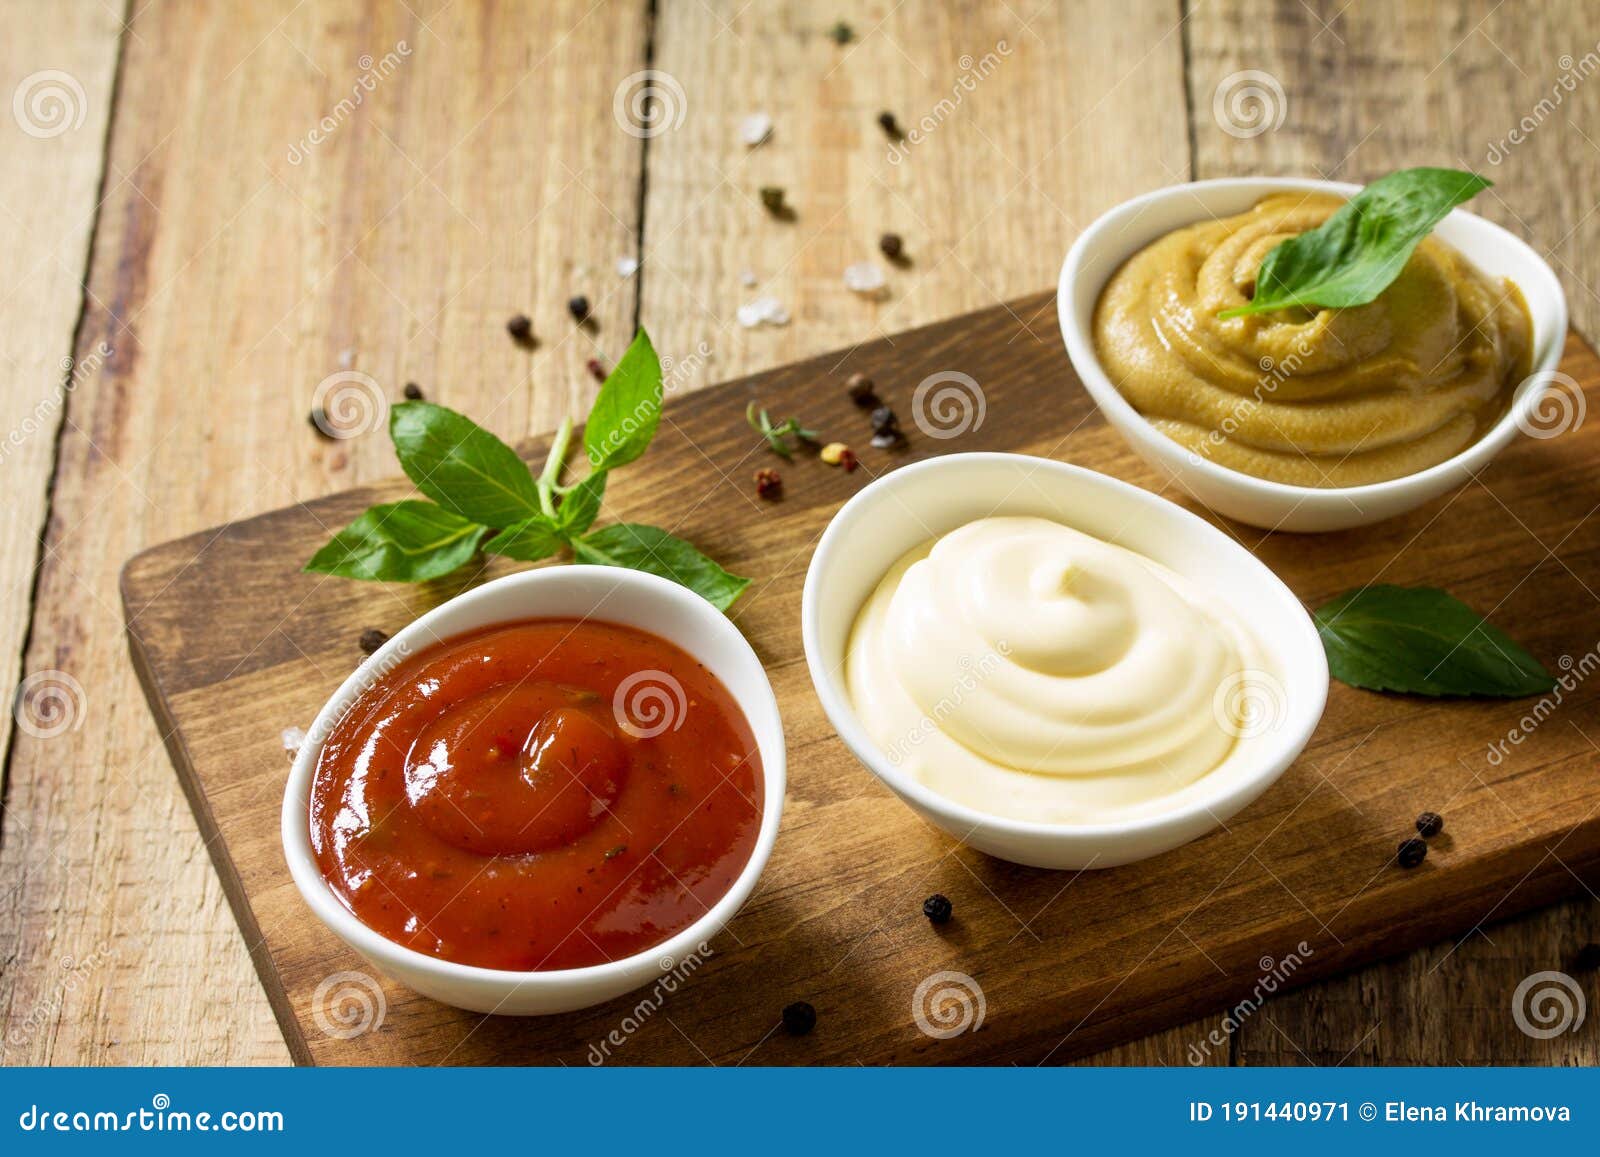 assortiment sticks de sauce mayonnaise,ketchup, moutarde, sauce salade